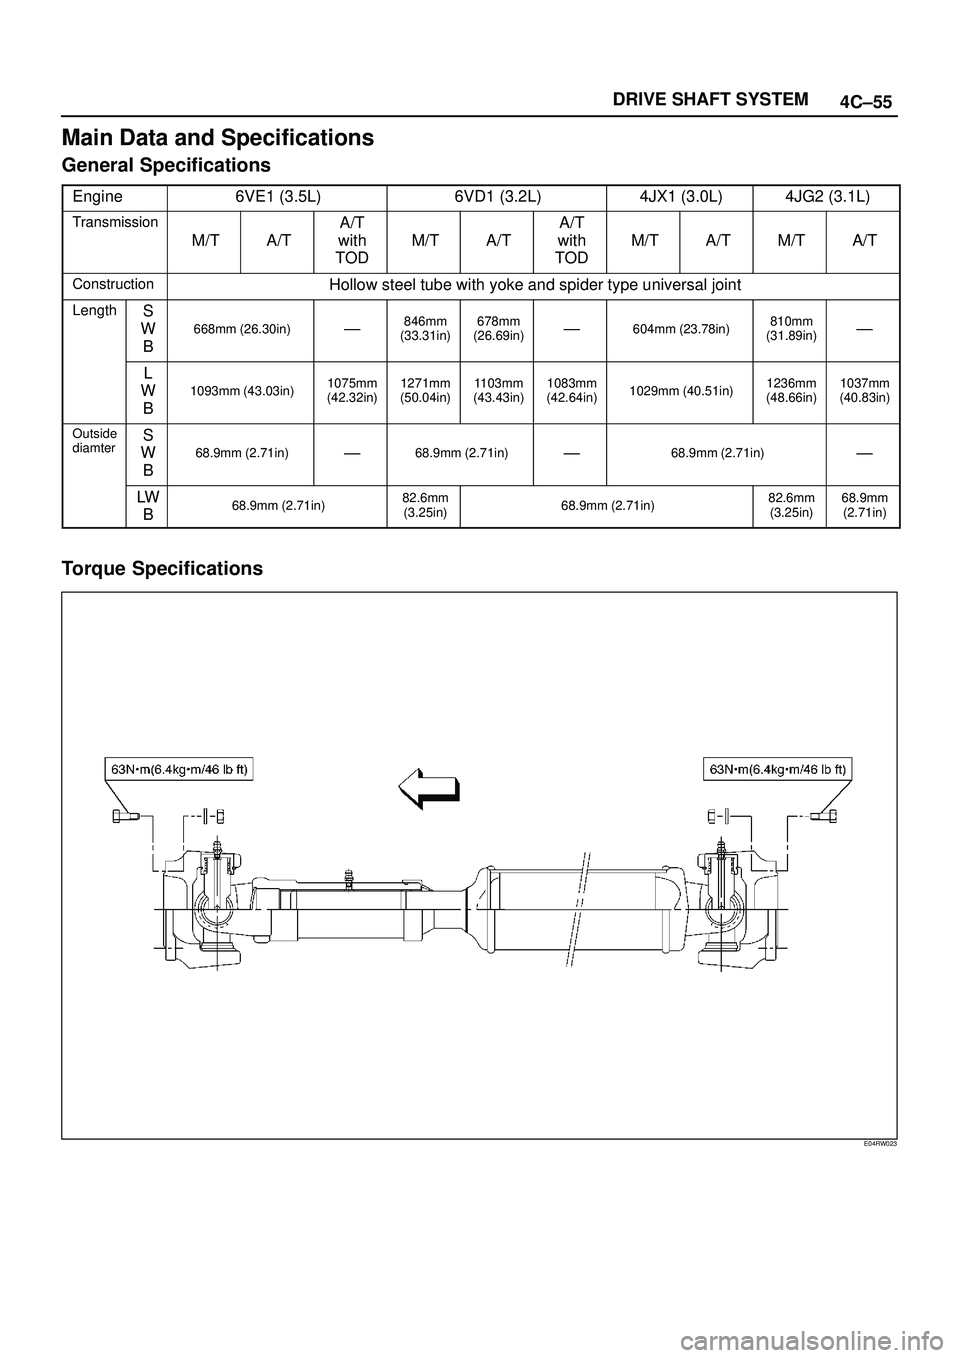 ISUZU TROOPER 1998  Service Repair Manual 4C±55 DRIVE SHAFT SYSTEM
Main Data and Specifications
General Specifications
Engine6VE1 (3.5L)6VD1 (3.2L)4JX1 (3.0L)4JG2 (3.1L)
Transmission
M/TA/T
A/T
with
TOD
M/TA/T
A/T
with
TOD
M/TA/TM/TA/T
Const